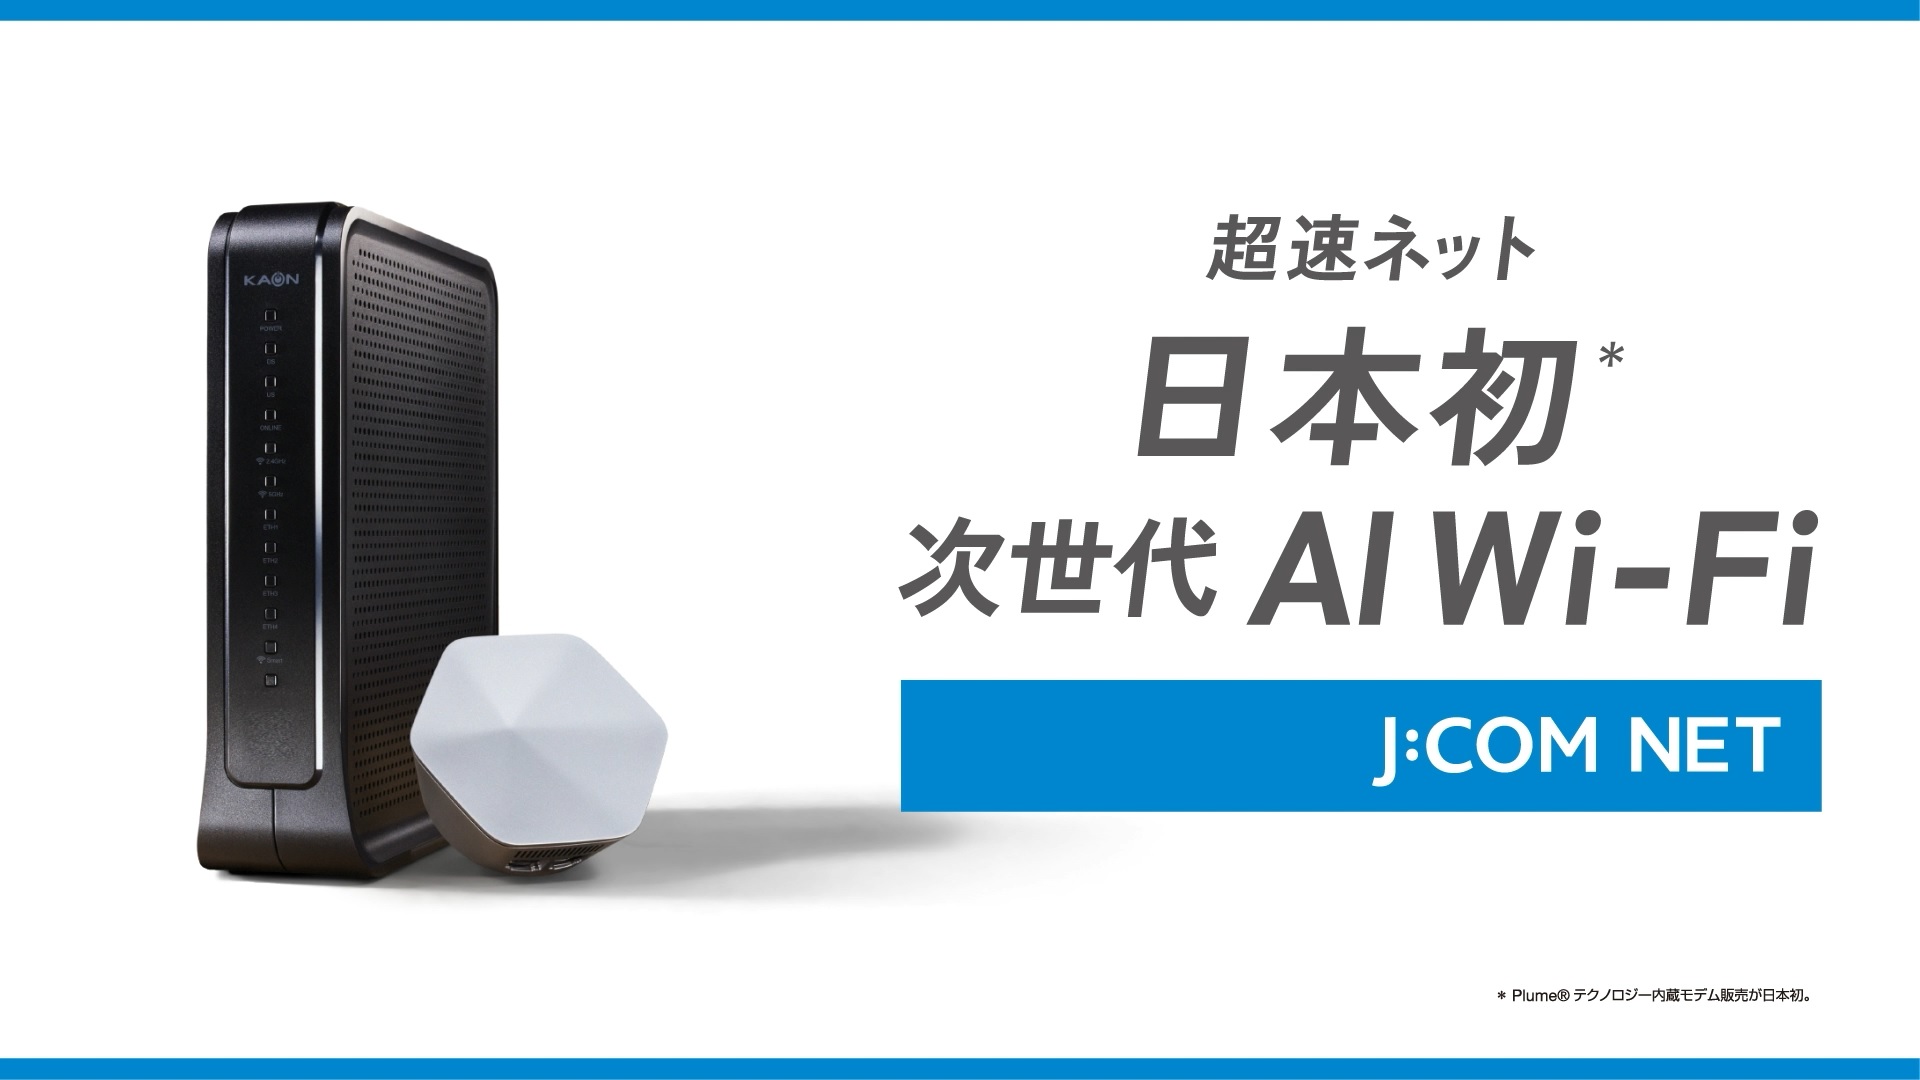 Ultra-fast internet Japan's first AI-based Wi-Fi